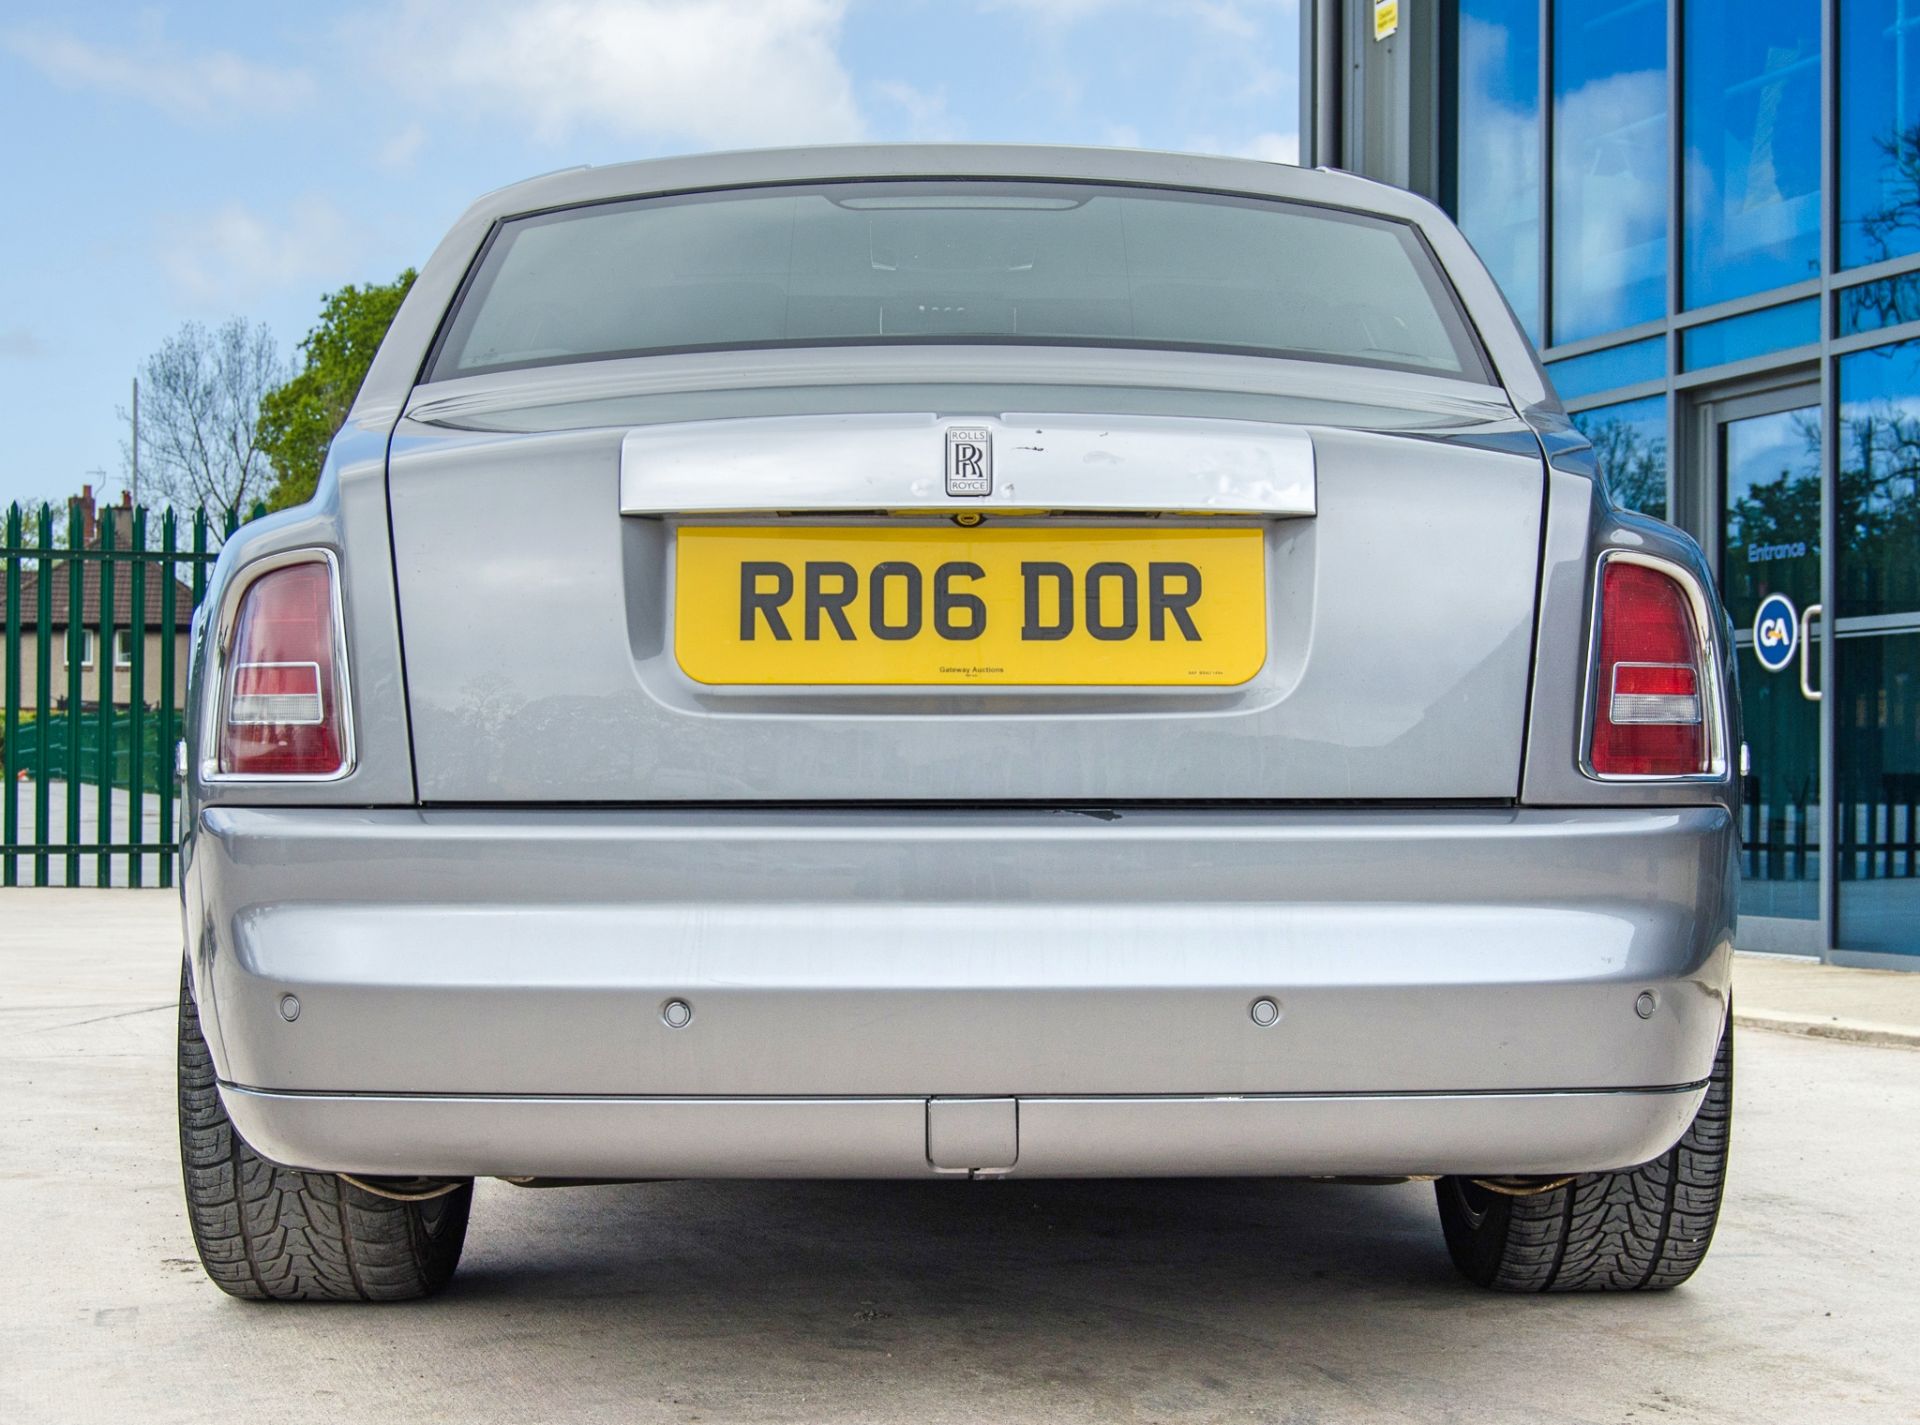 Rolls Royce Phantom 6749cc V12 Auto 4 door saloon car Registration Number: RR06 DOR Date of - Image 11 of 59